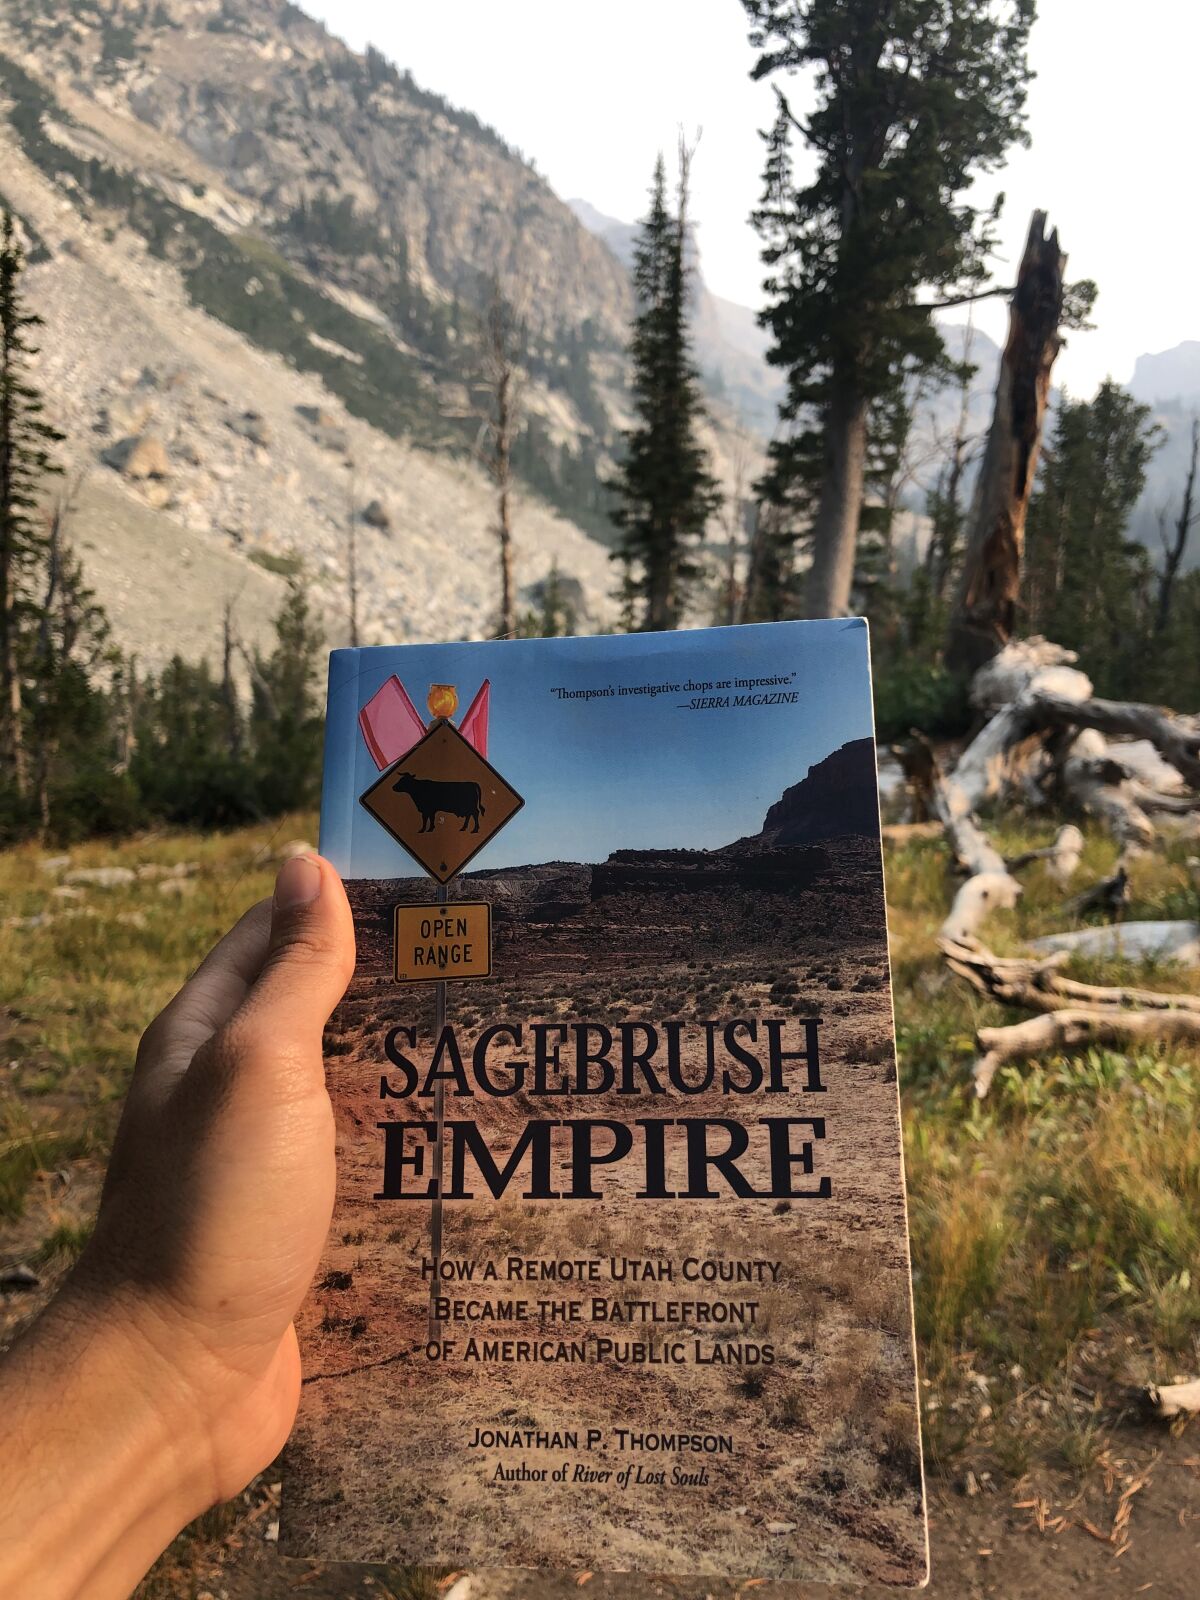 My copy of "Sagebrush Empire" at Grand Teton National Park.